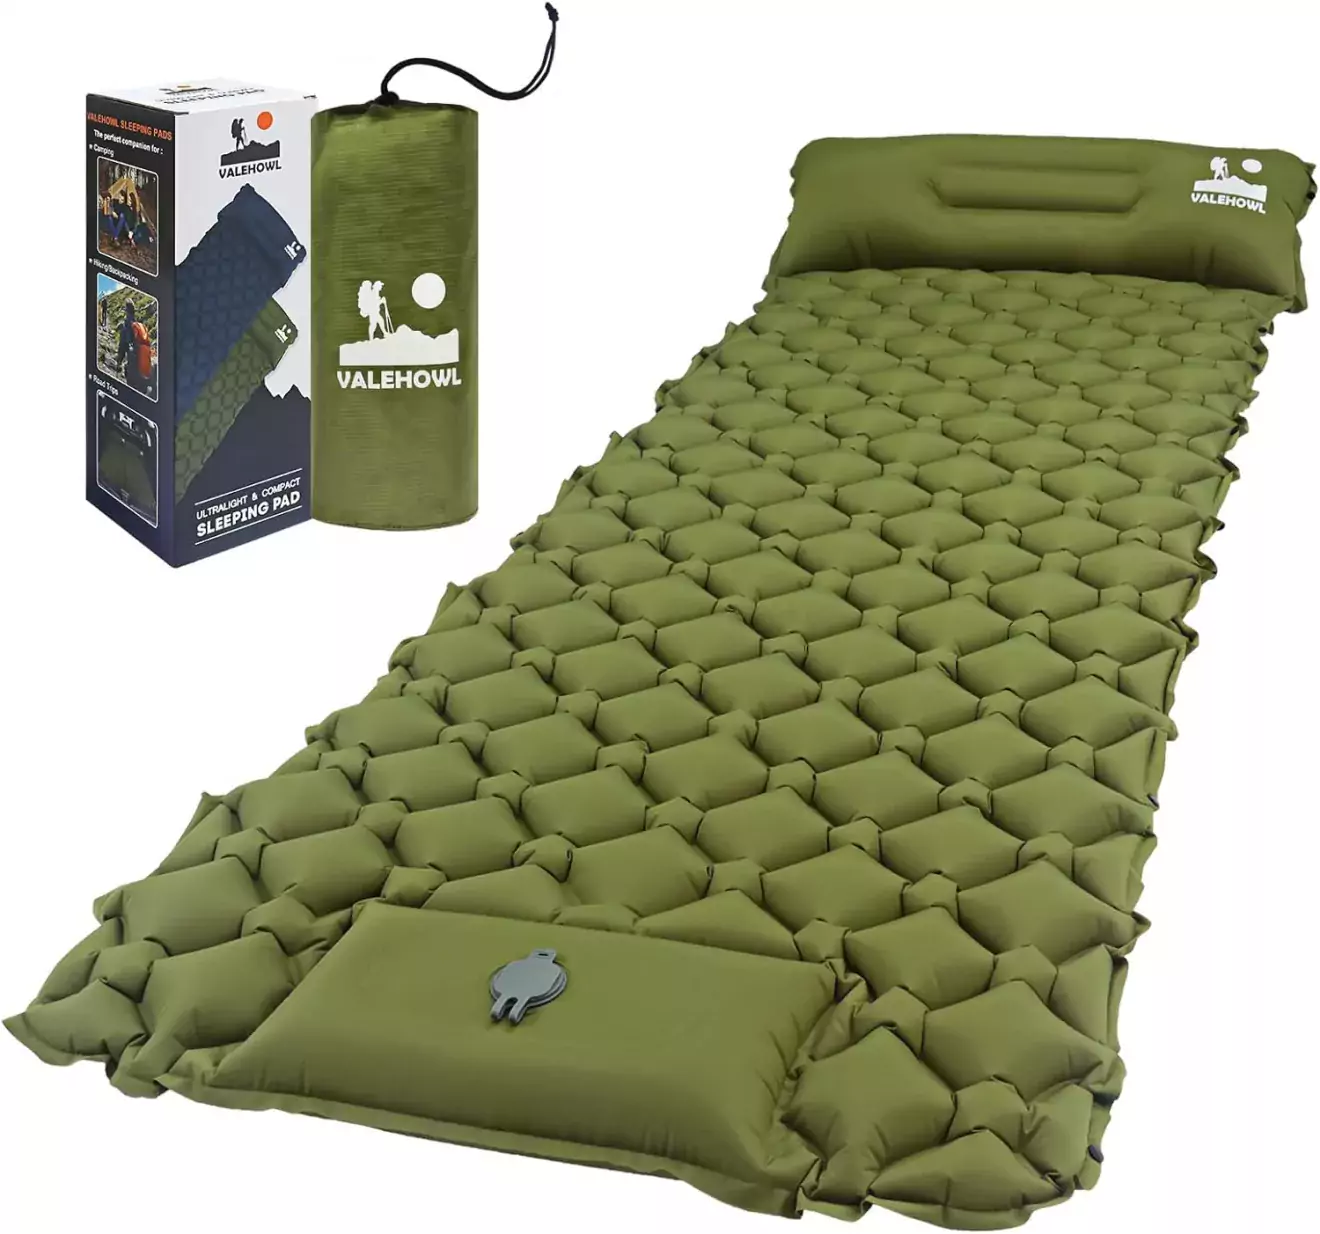 Kit Review - Valehowl sleeping mat